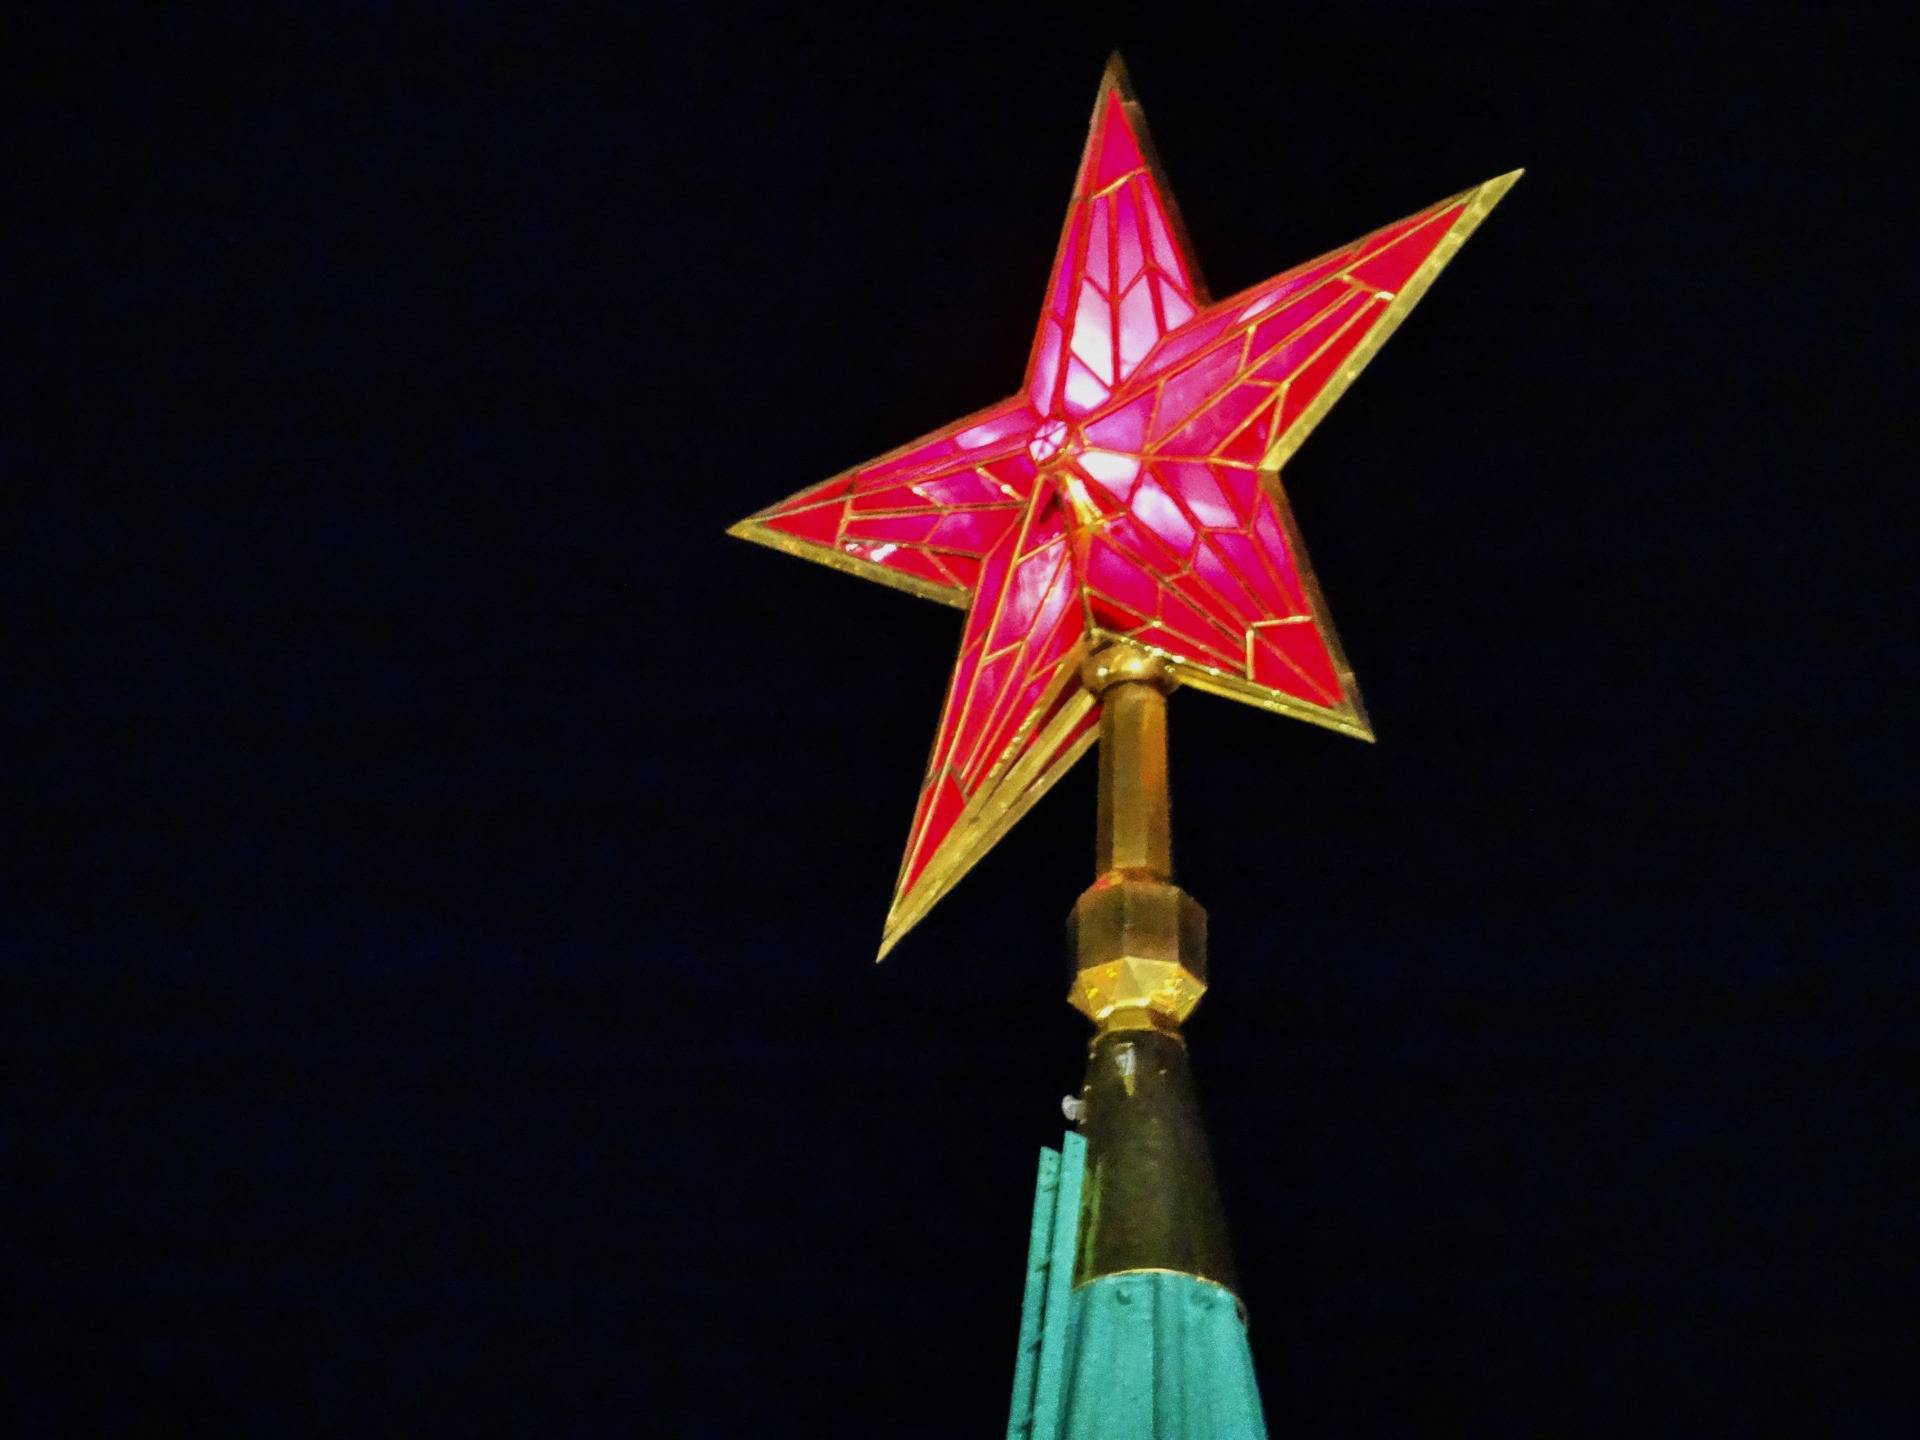 The red star of Spasski